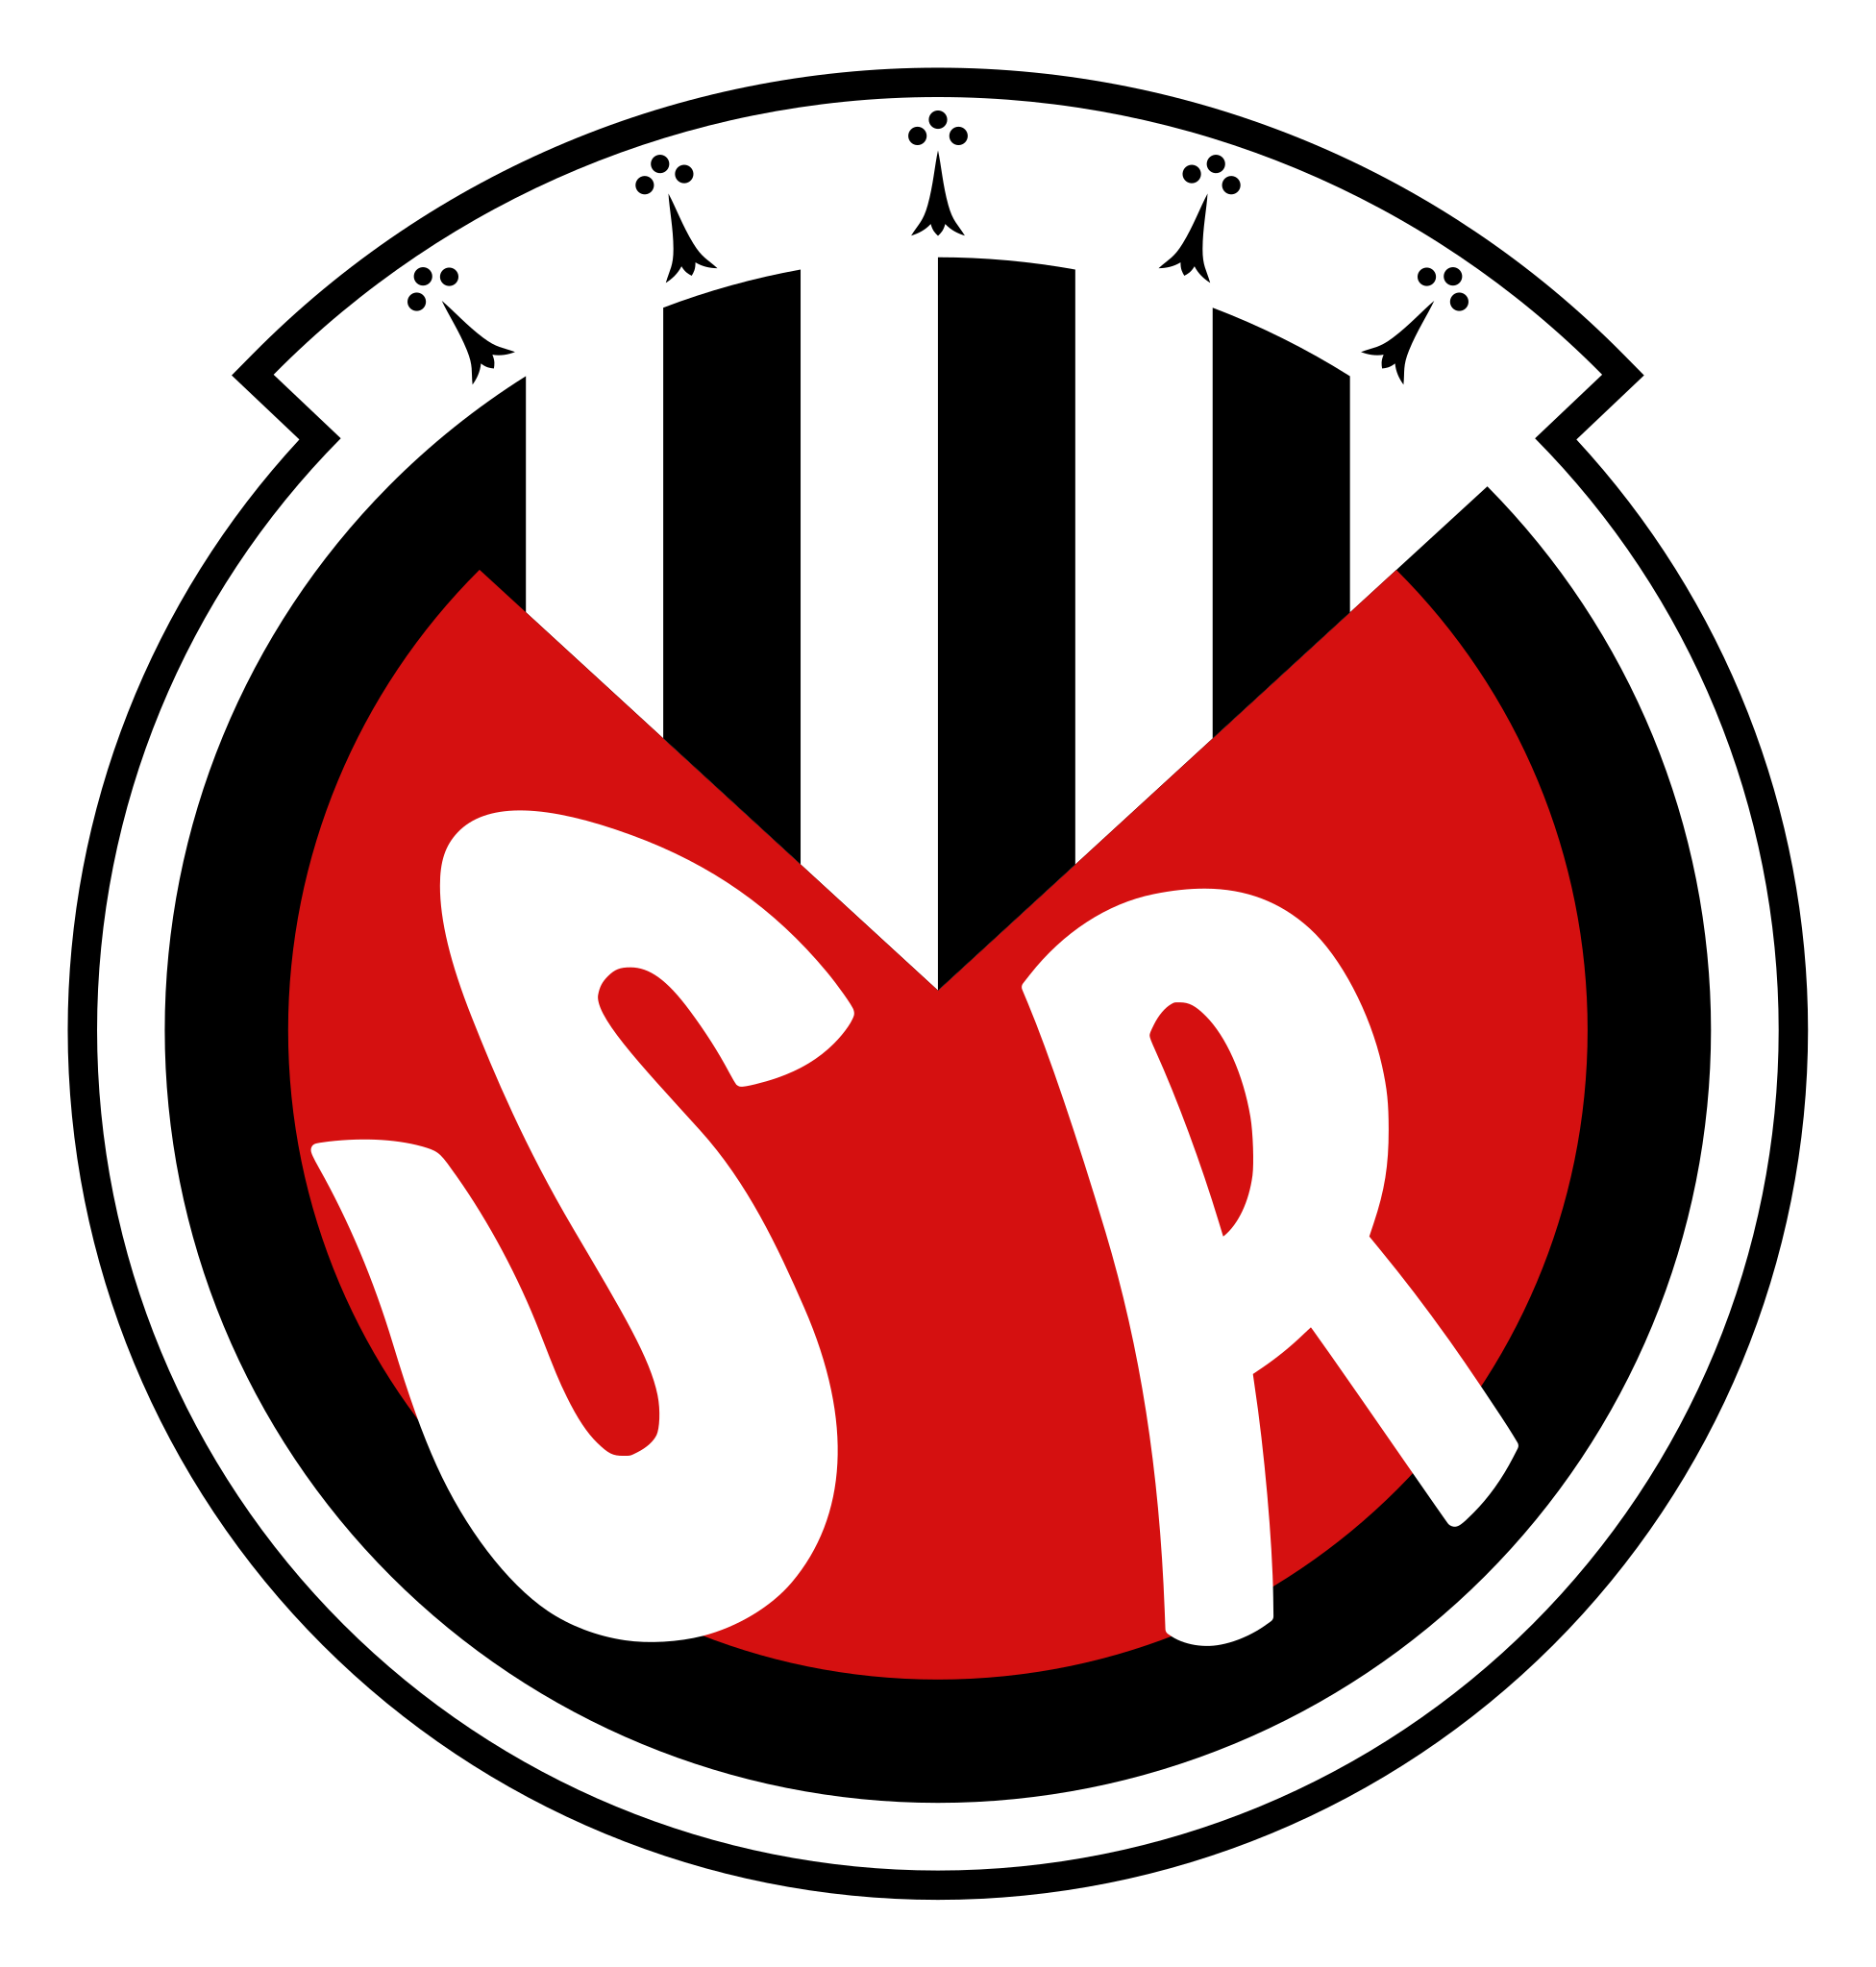 File:Stade Rennais (logo 1960).svg - Wikipedia